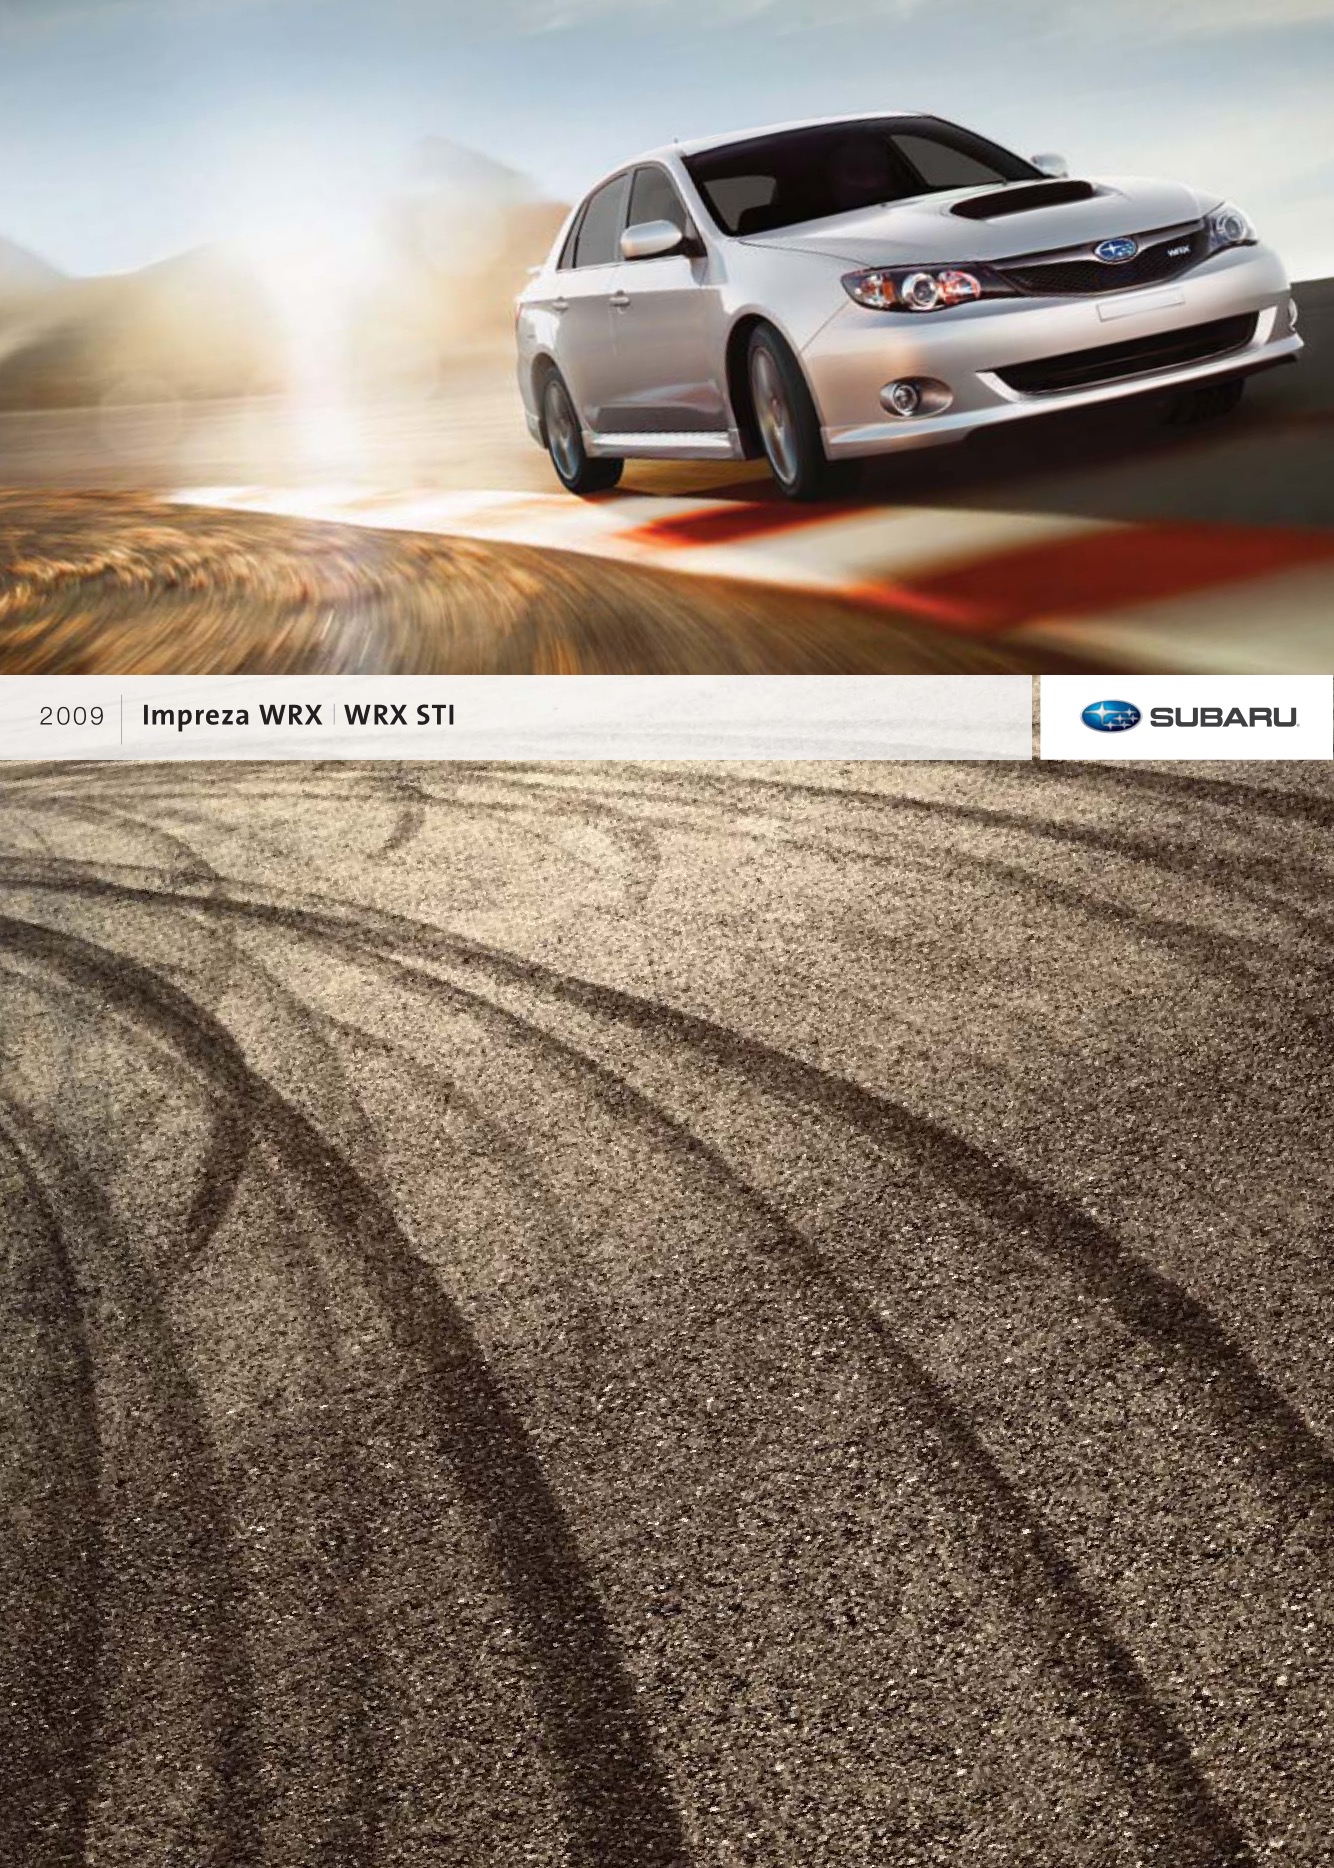 2009 Subaru Impreza WRX Brochure